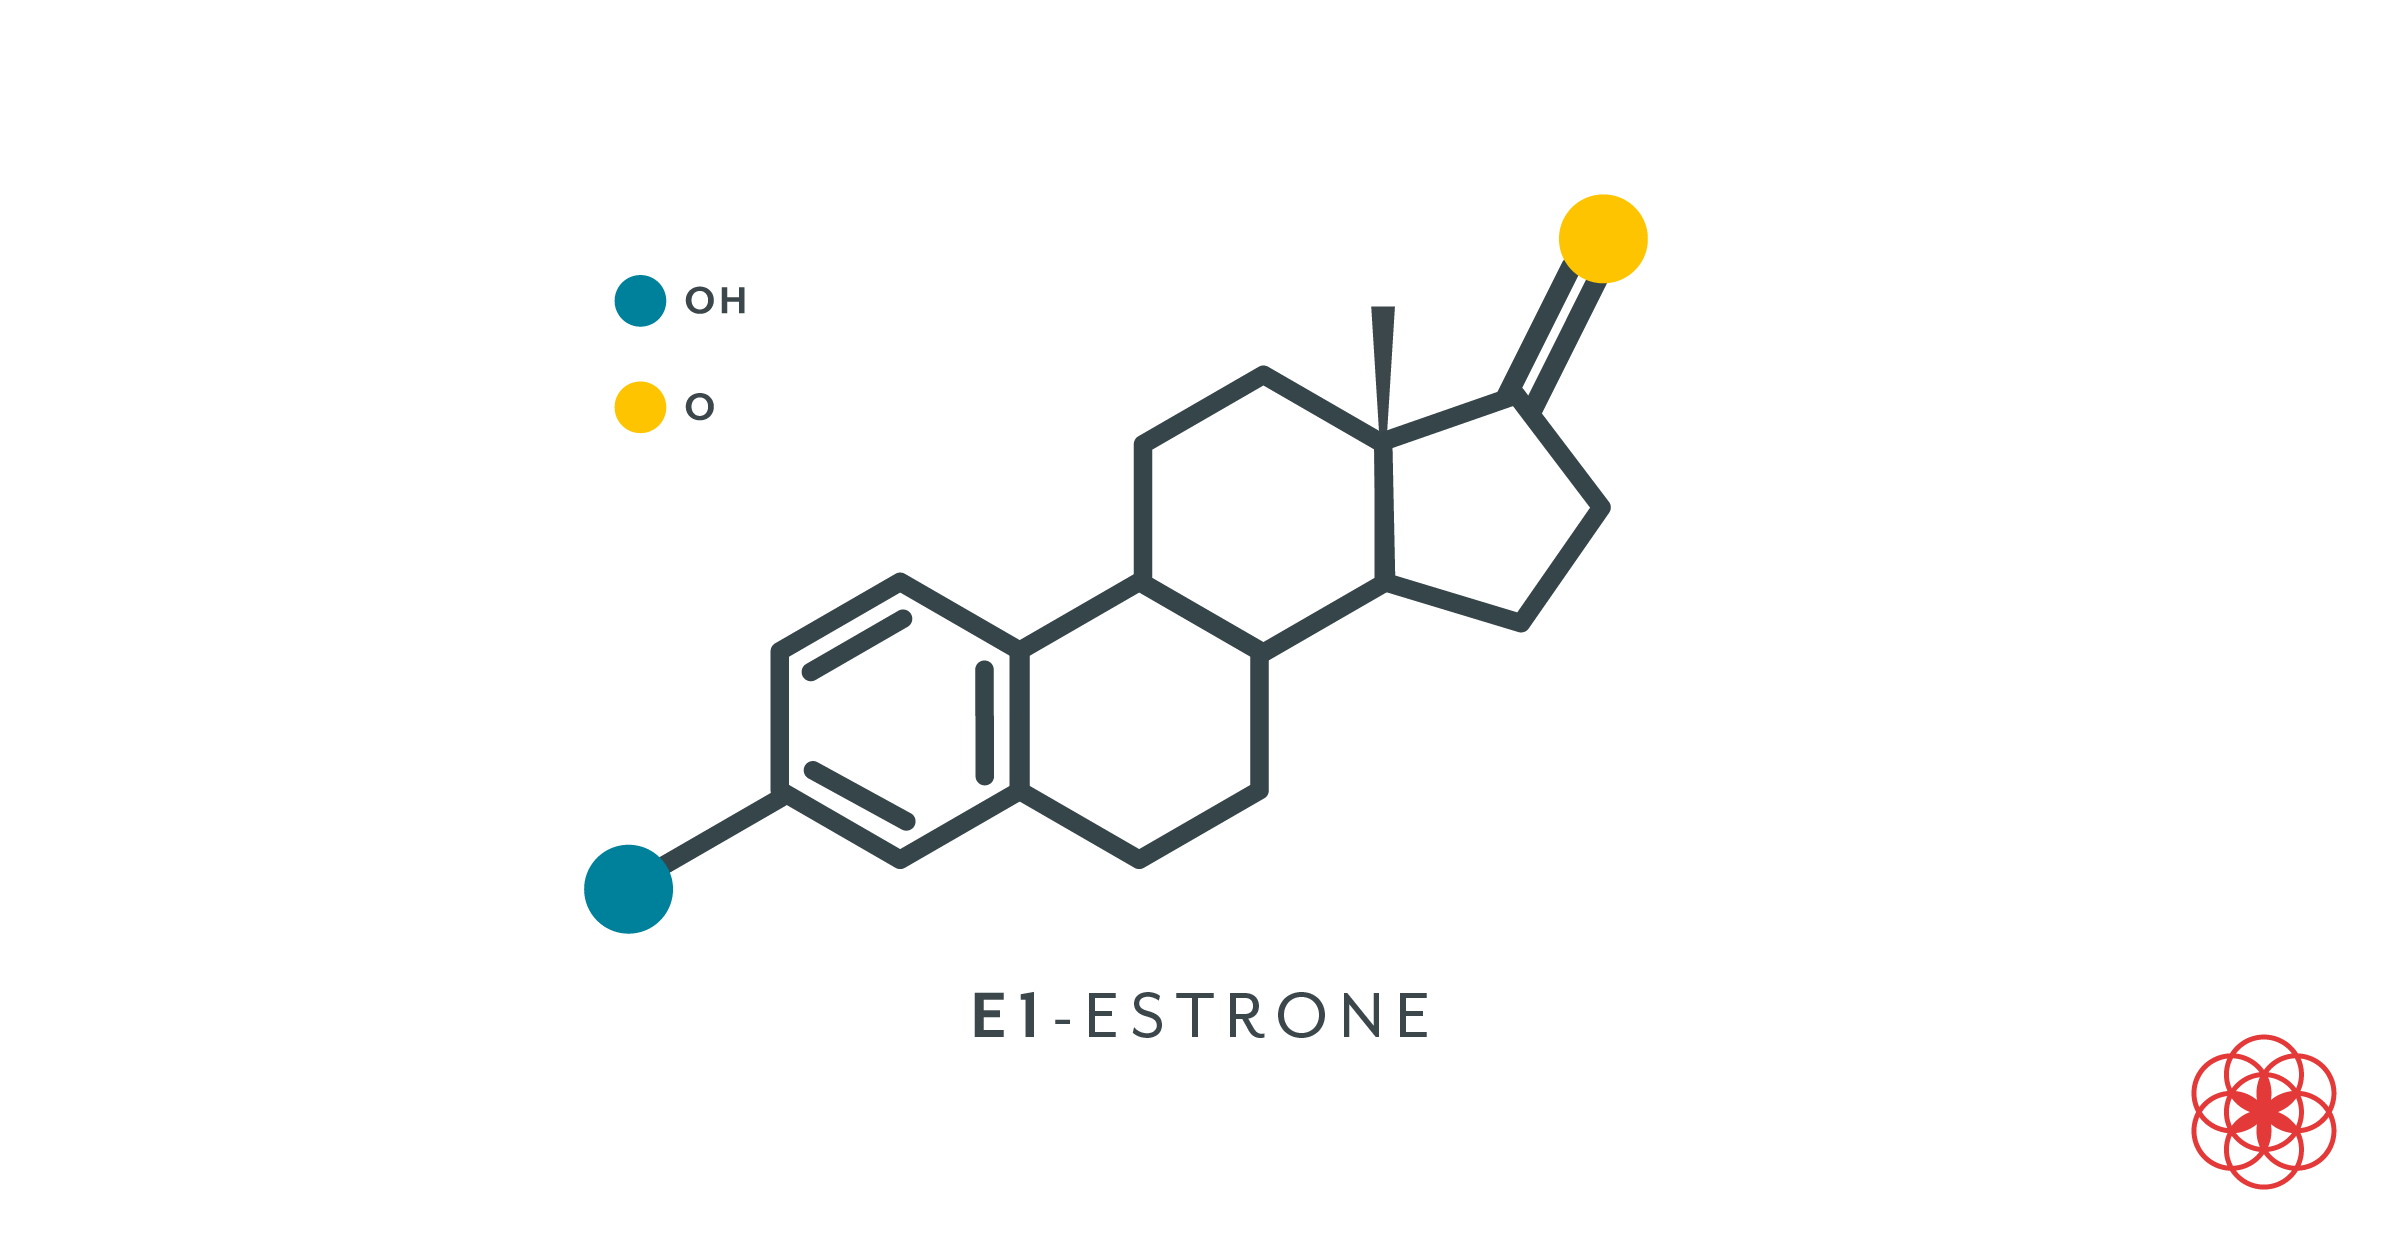 Estrogen Definition, Symptoms, and More